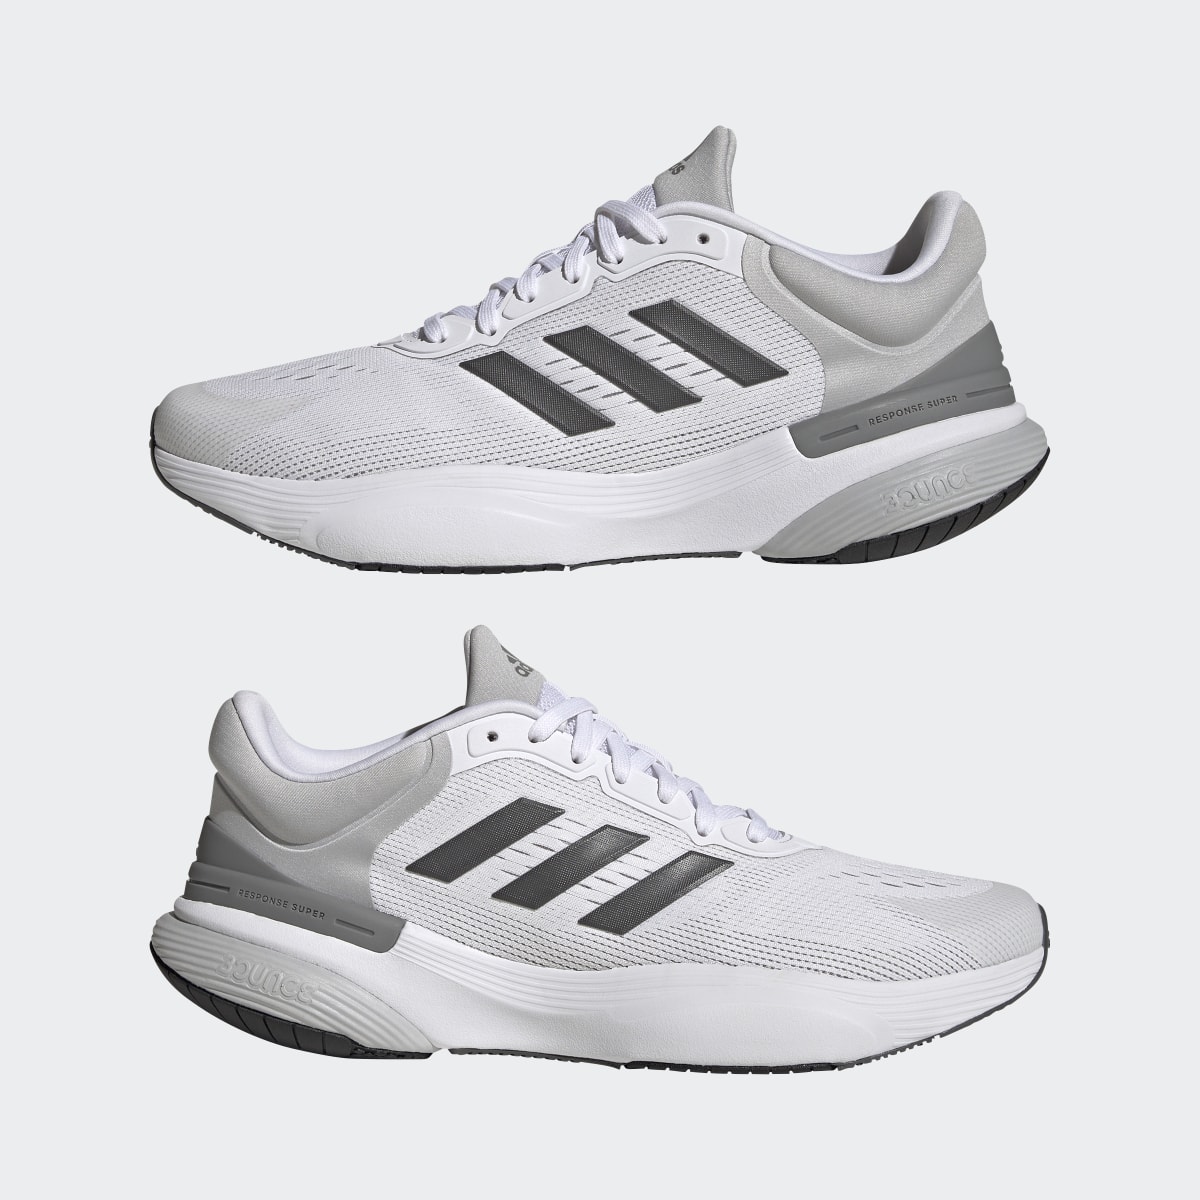 Adidas Response Super 3.0 Shoes. 8